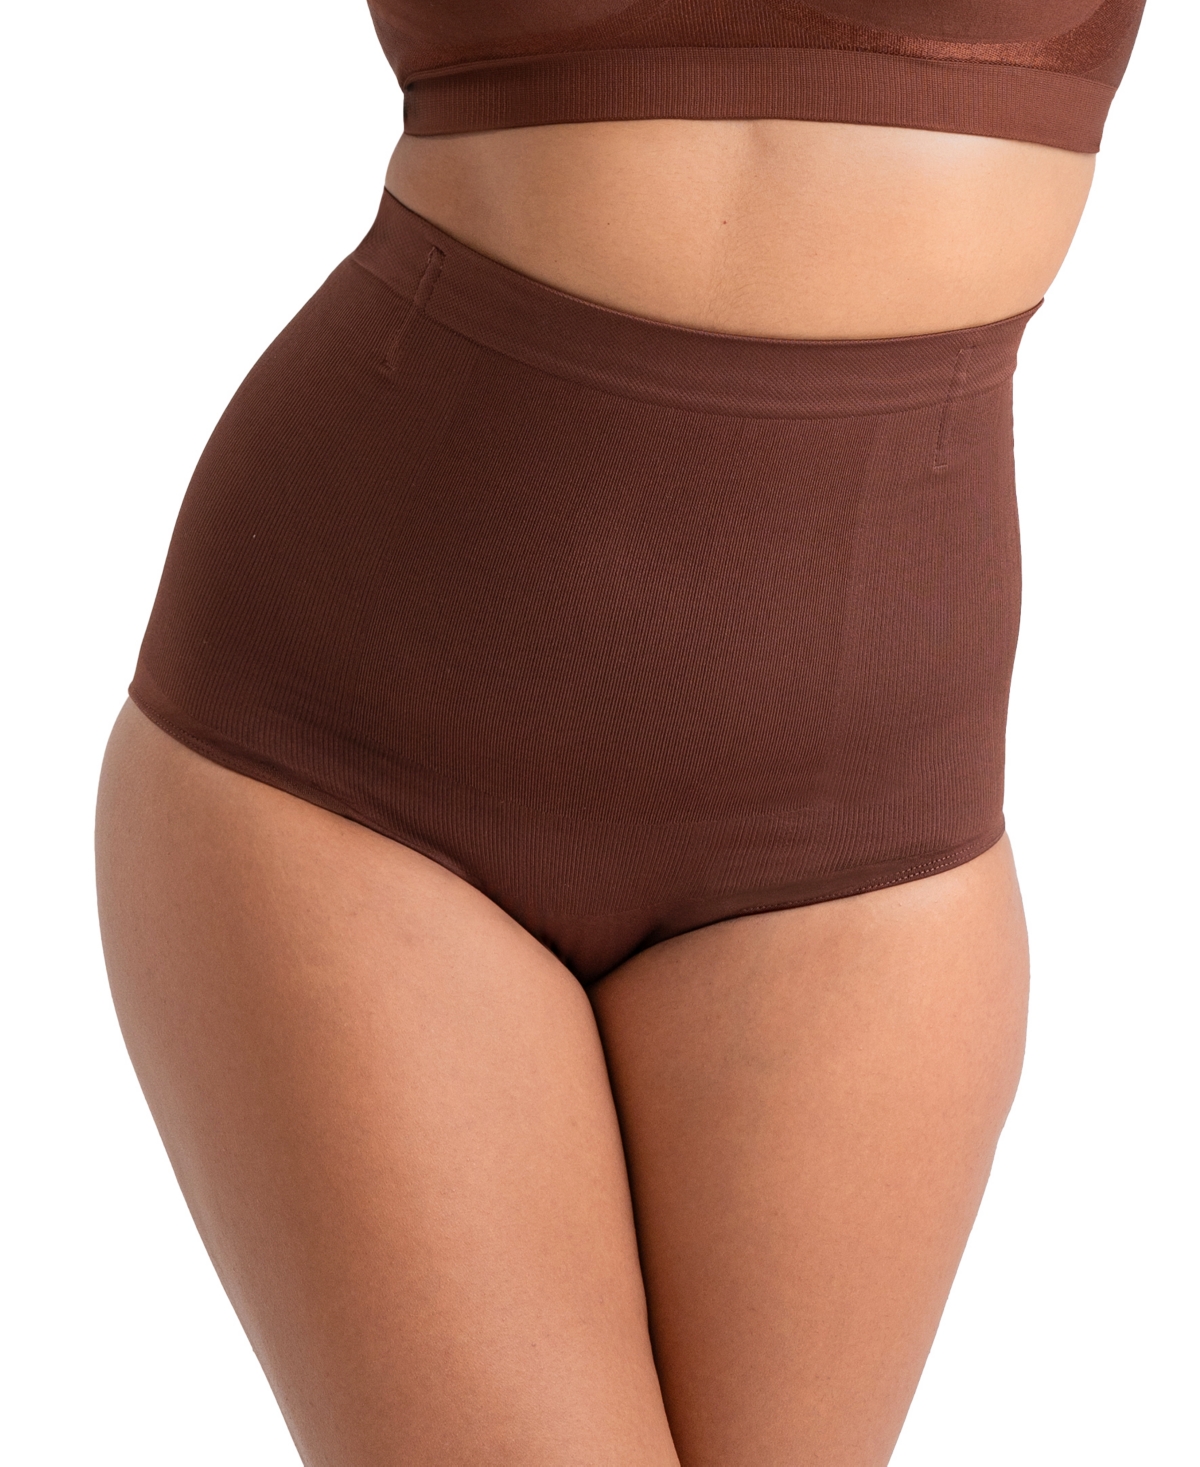 Women's High Waisted Shaper Panty 54008 - Chocolate